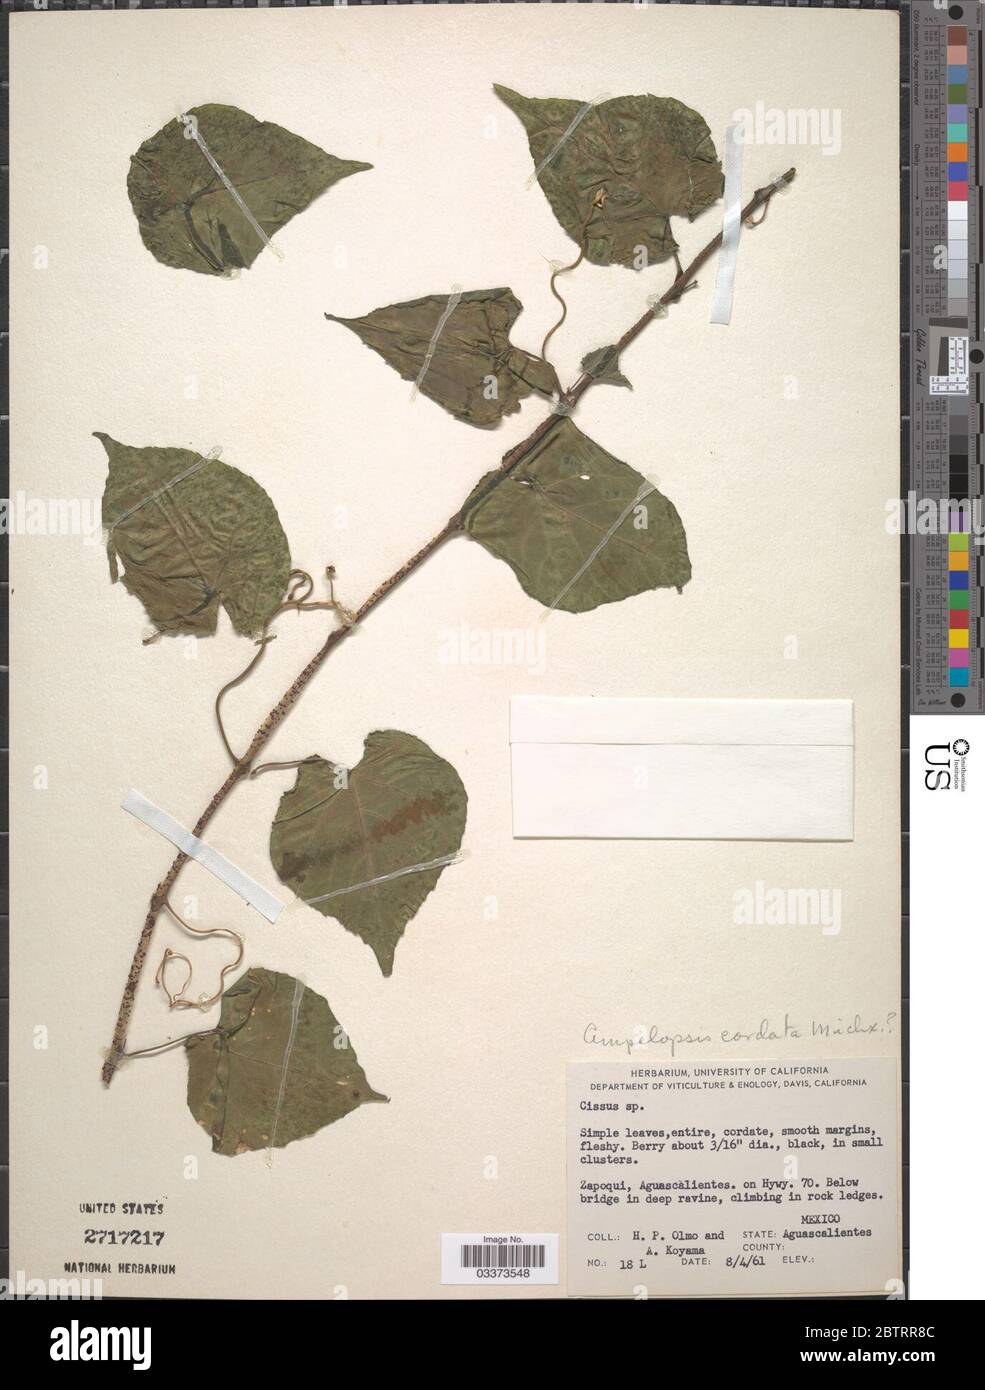 Ampelopsis cordata Michx. Stock Photo